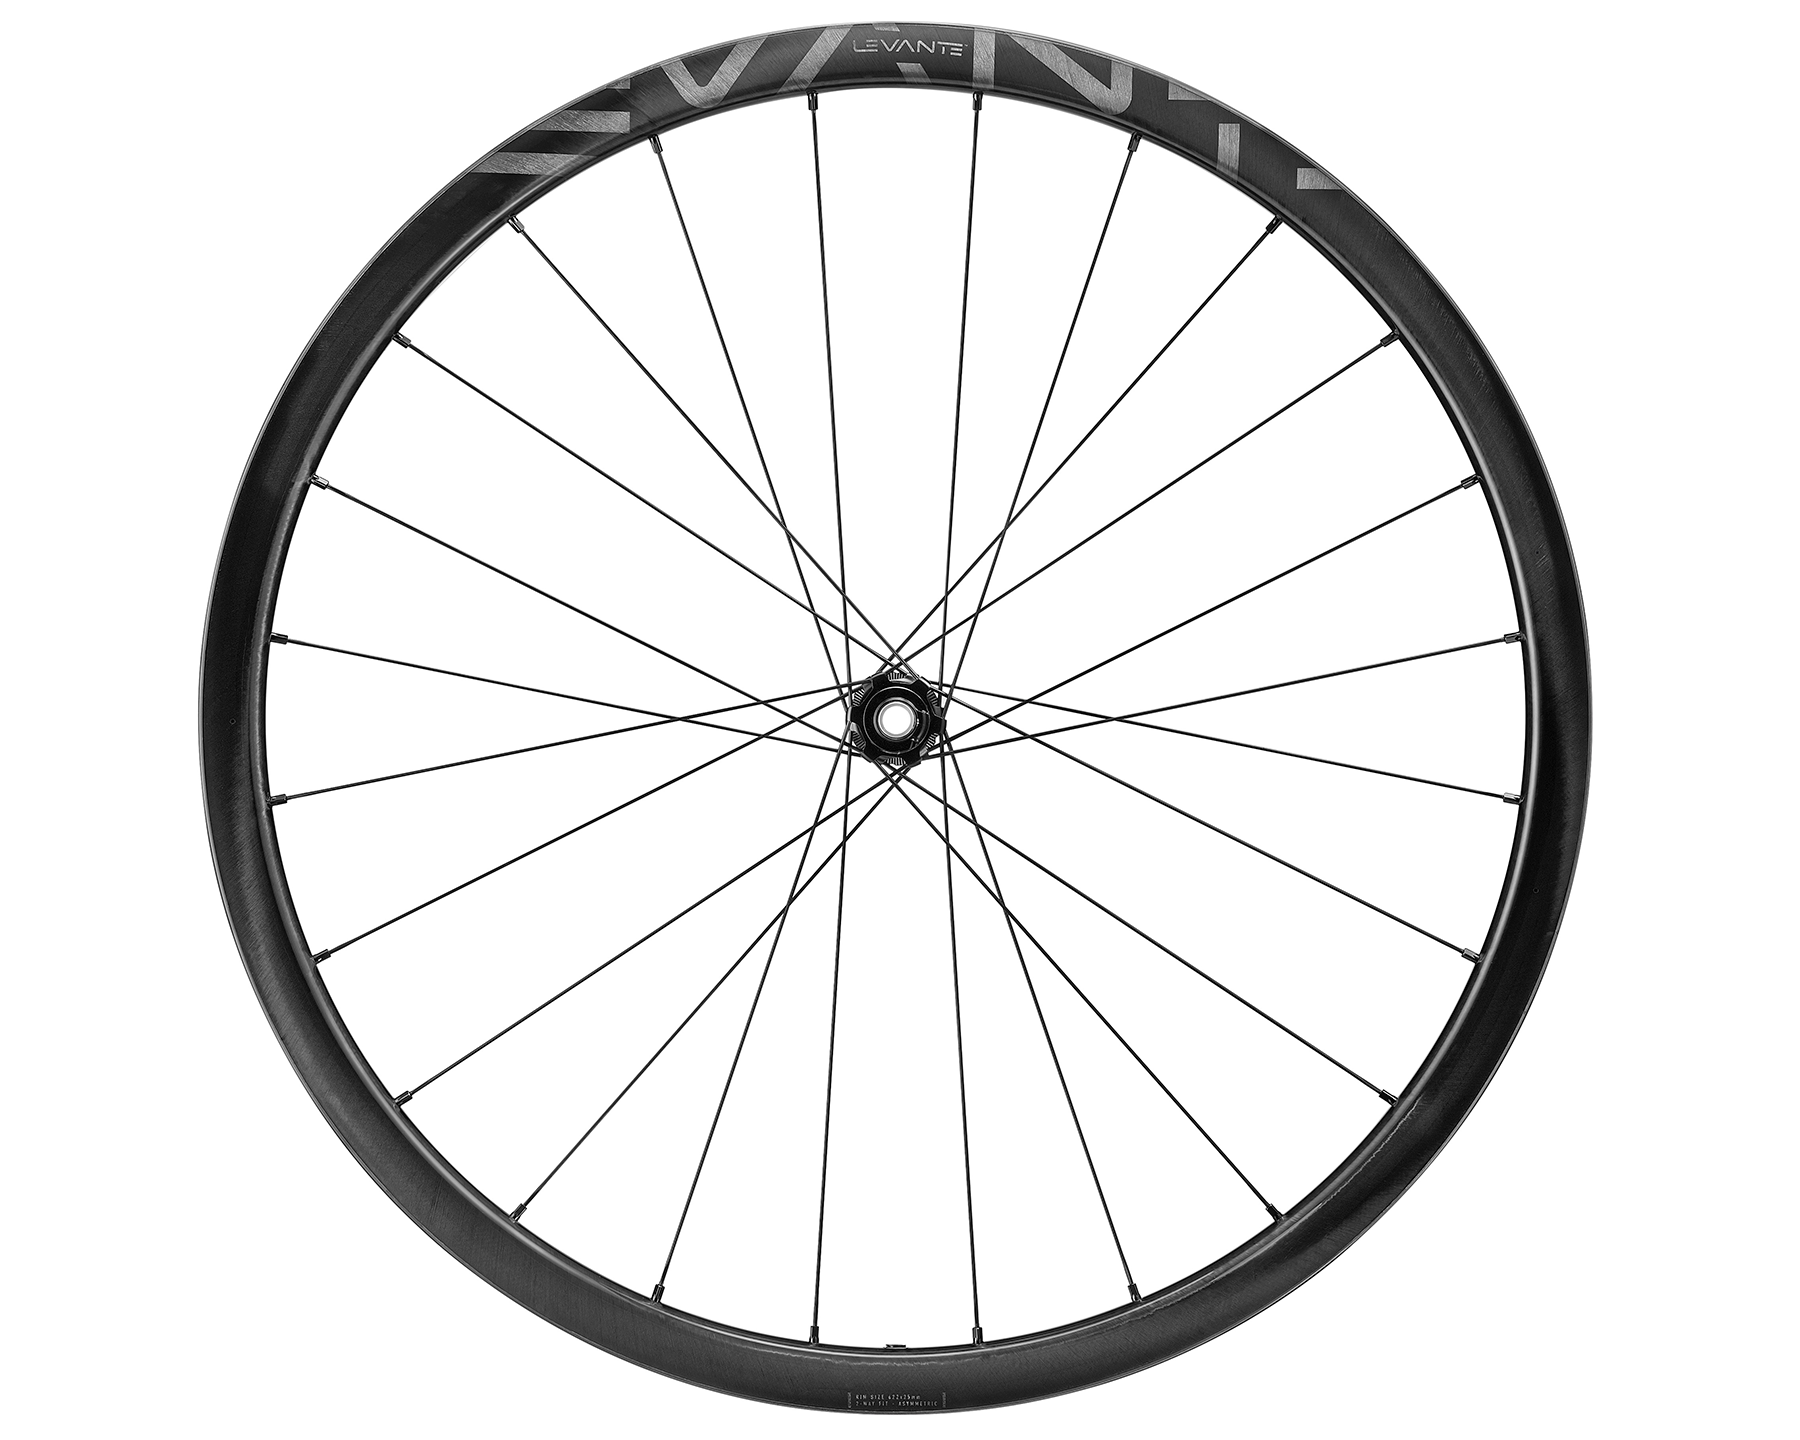 Campagnolo Levante wheelset